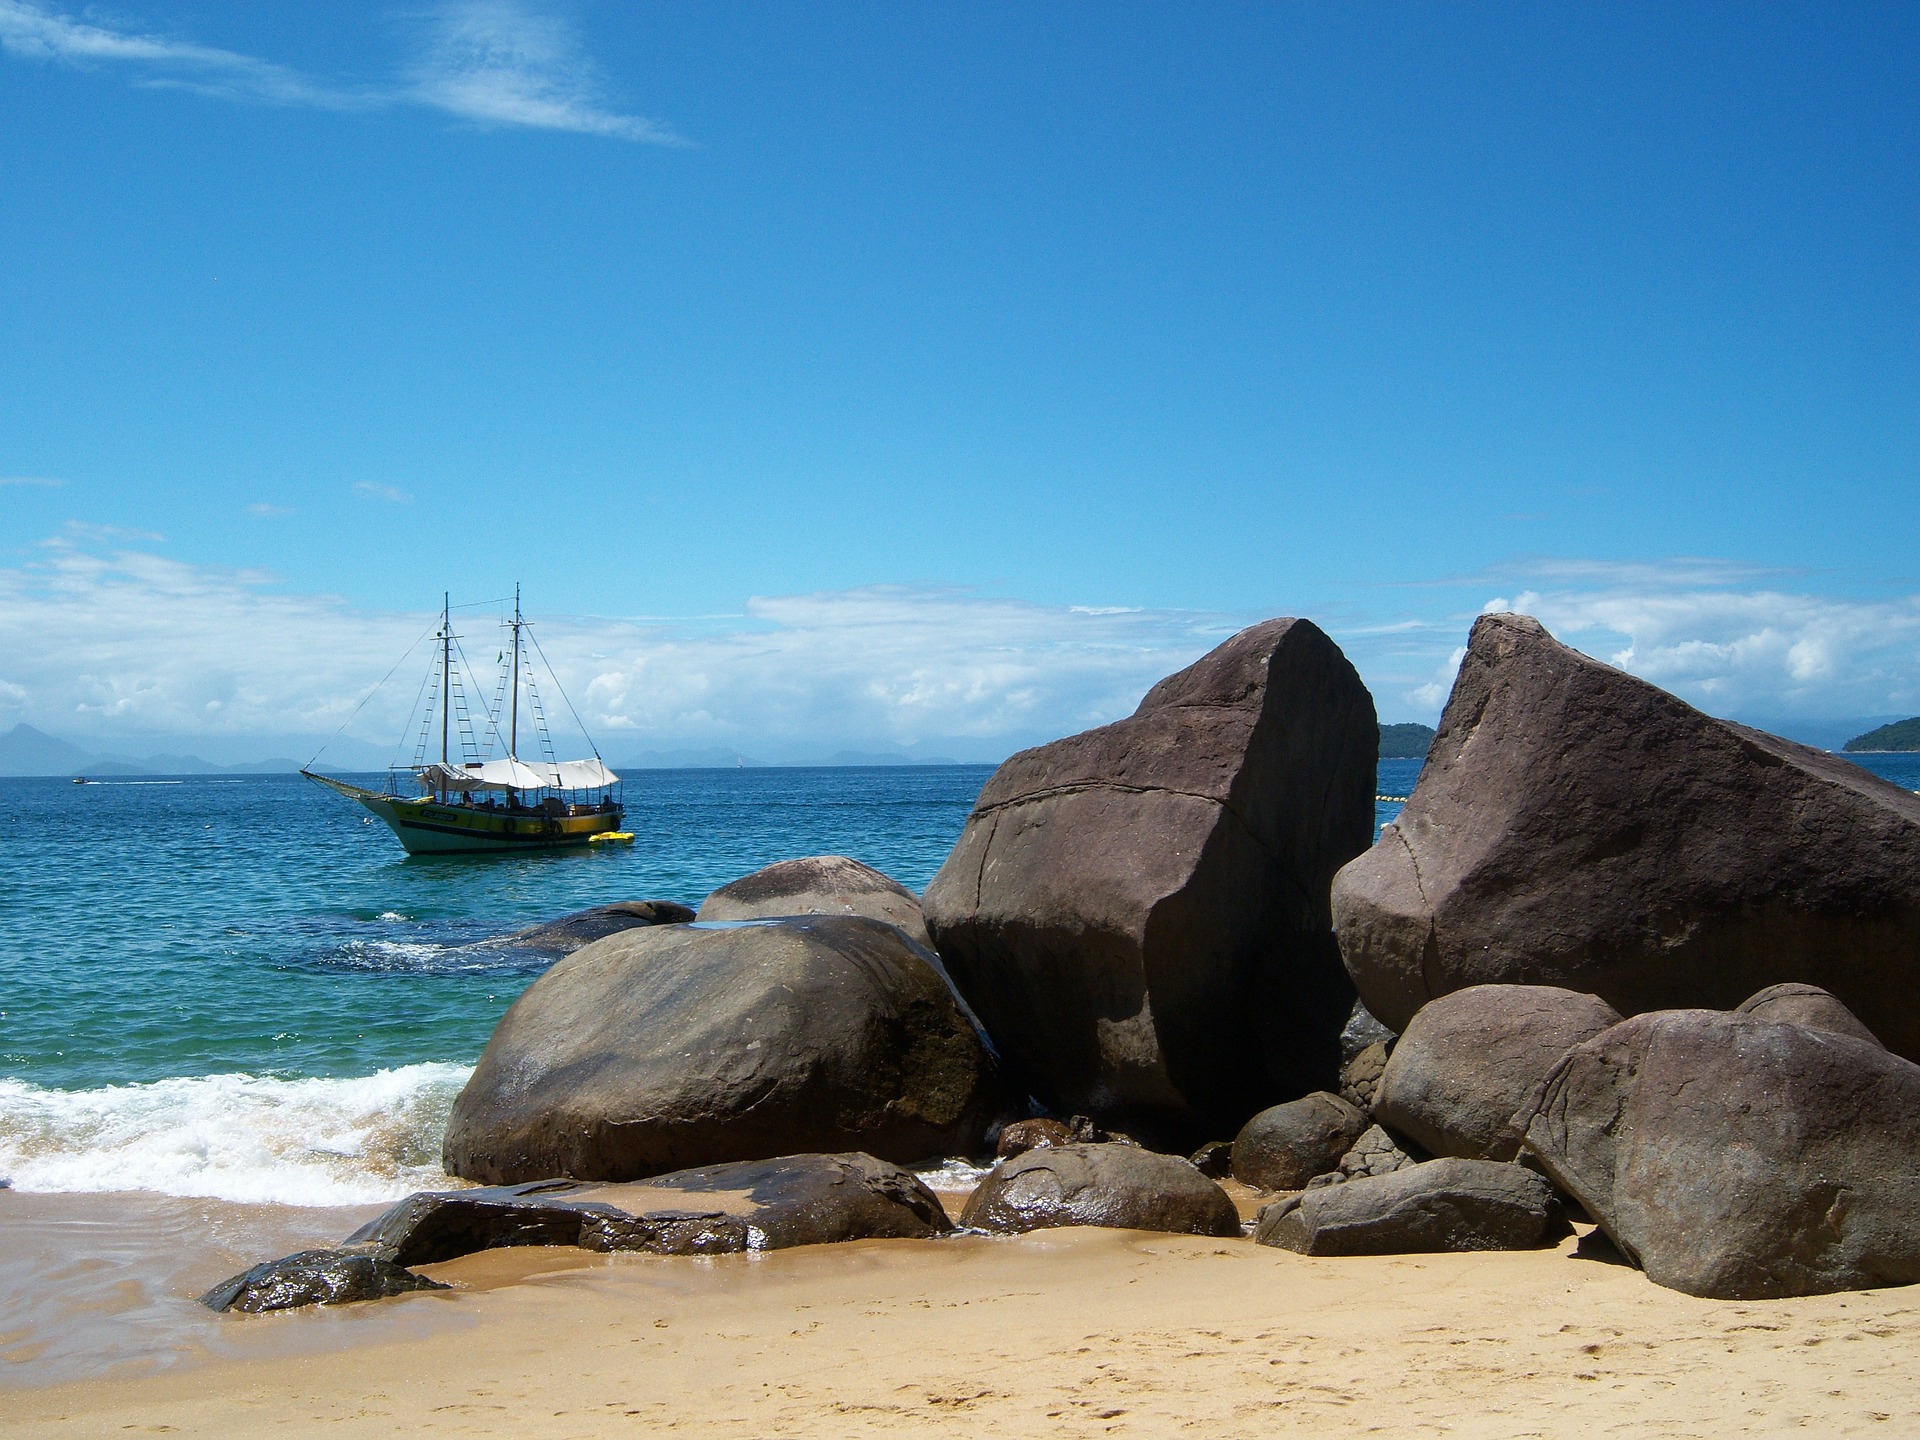 Ilha Grande shore, huge boulders and a sailboat.